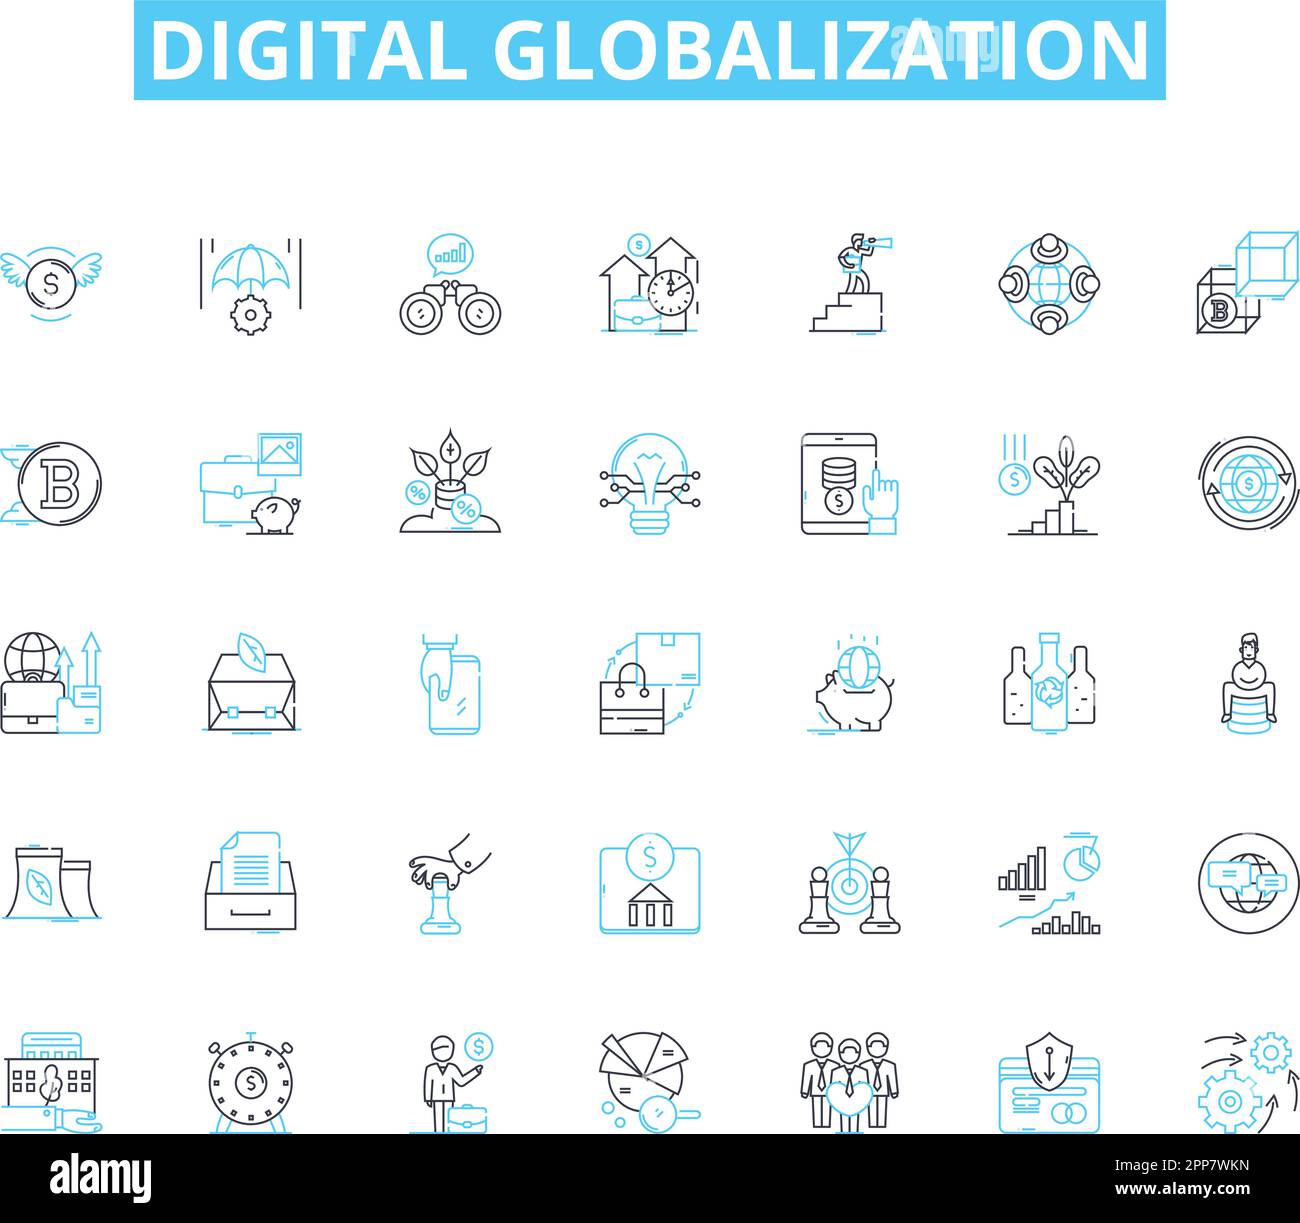 Digital globalization linear icons set. Connectivity, Interdependence, Integration, Digitalization, Expansion, Homogenization, Standardization line Stock Vector